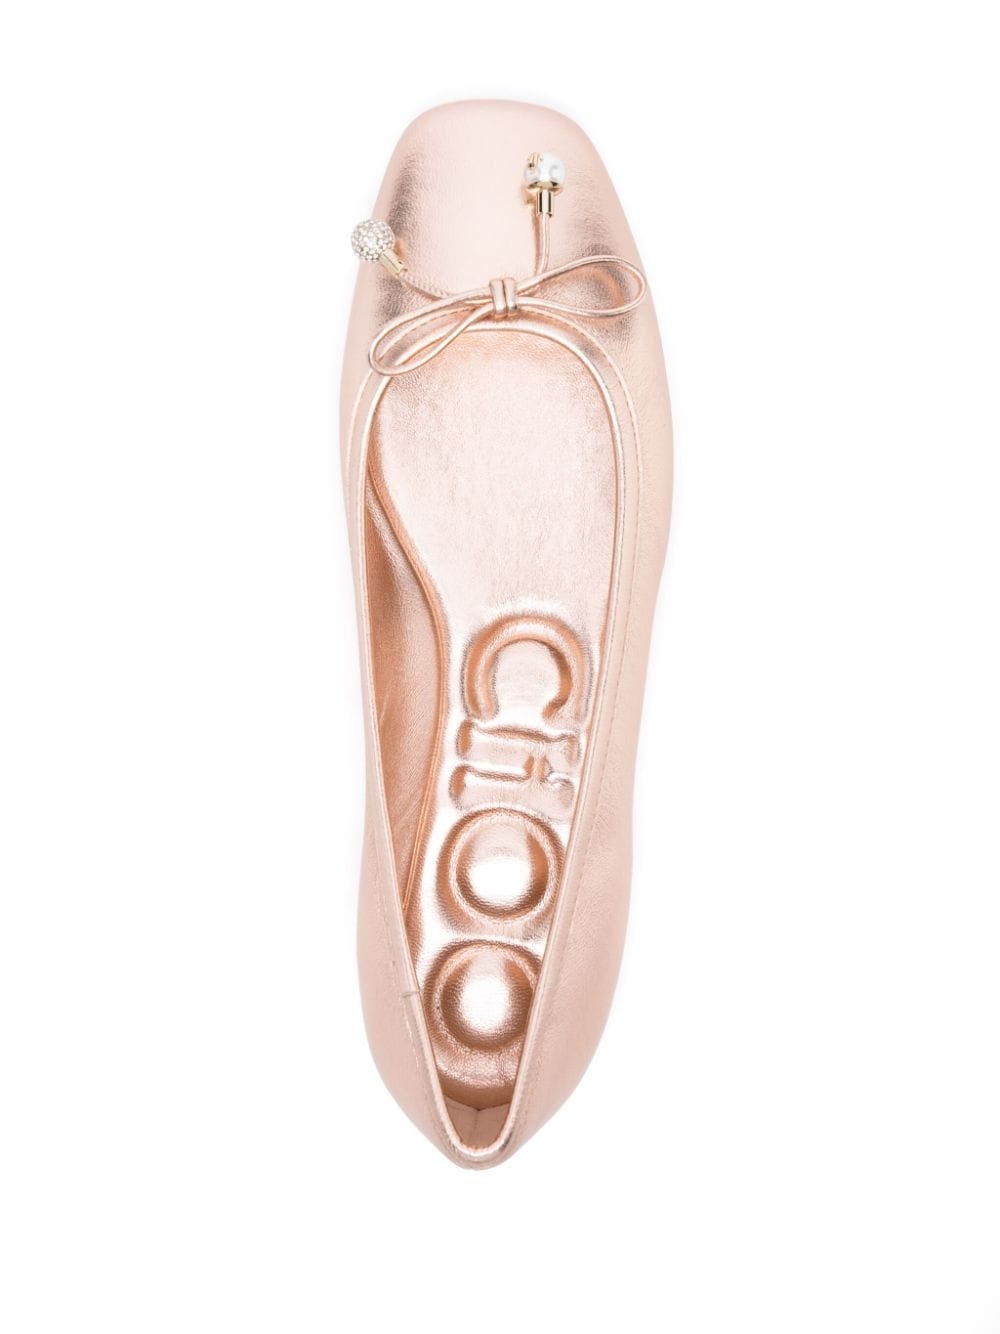 Elme metallic ballerina shoes - 4